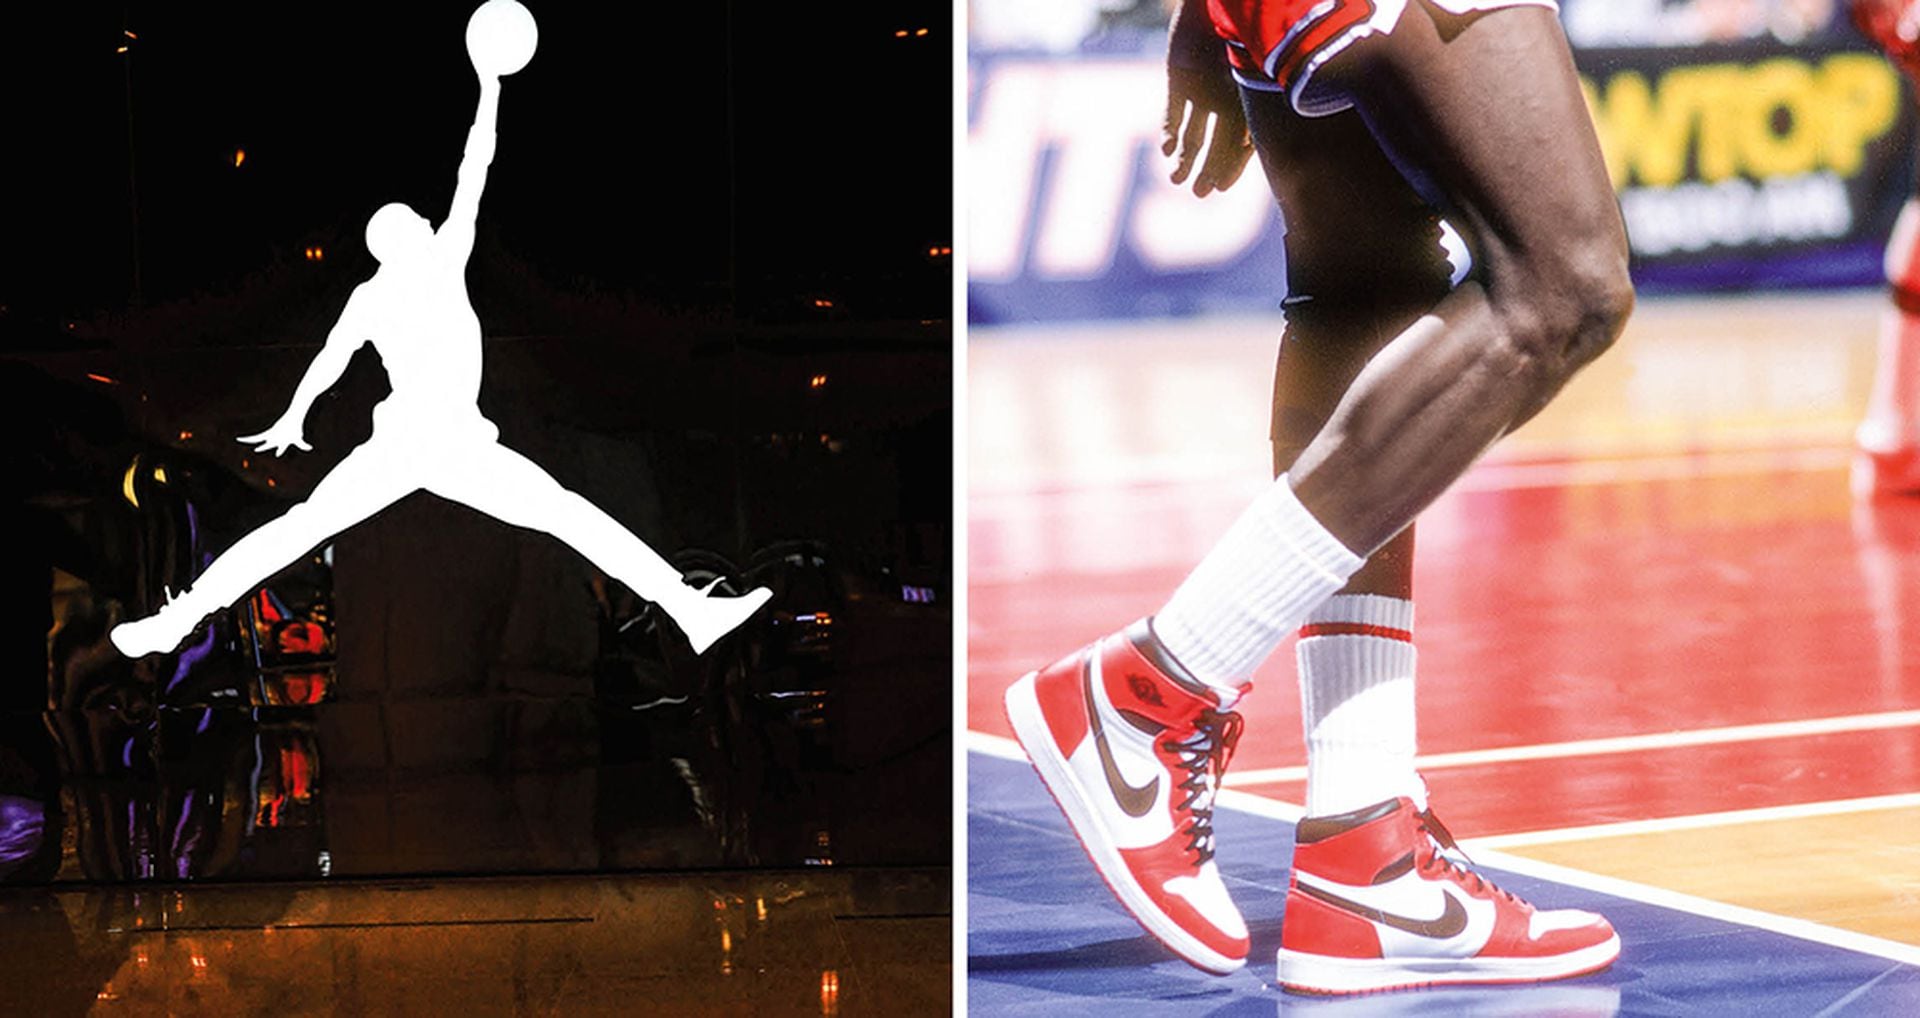 Zapatillas de Michael Jordan rompen récord absoluto con millonaria subasta:  “locura absoluta”